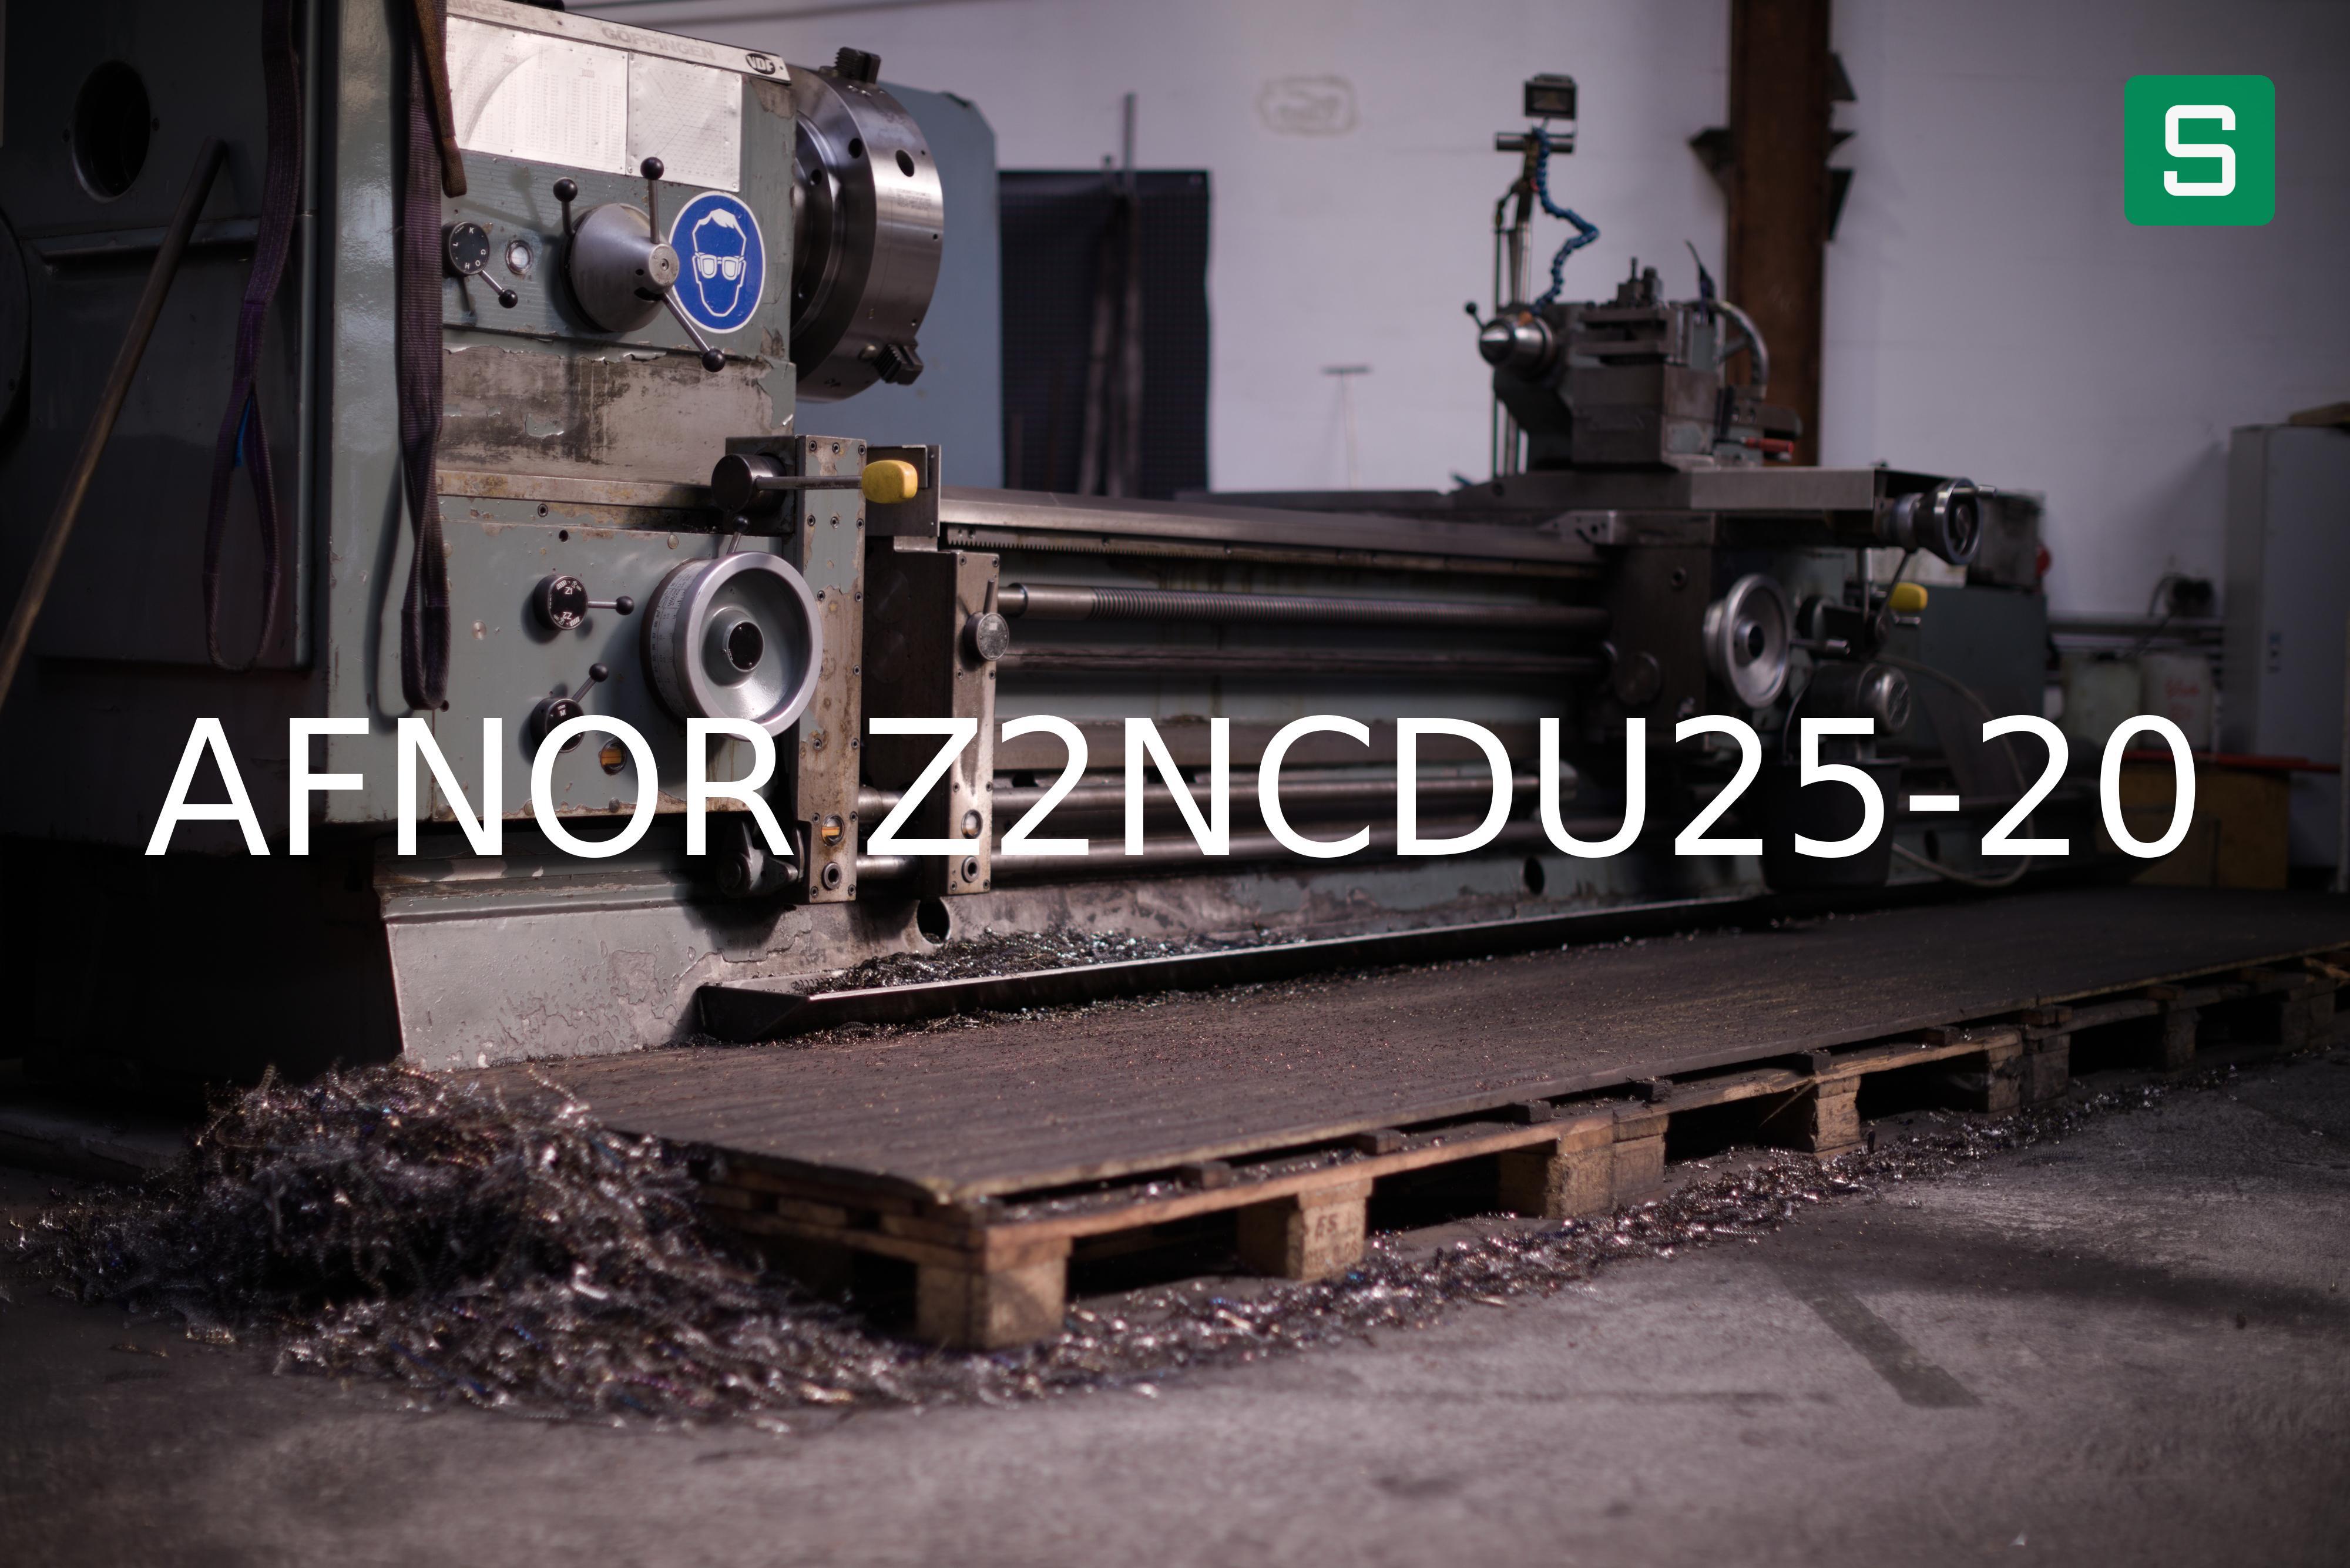 Material de Acero: AFNOR Z2NCDU25-20